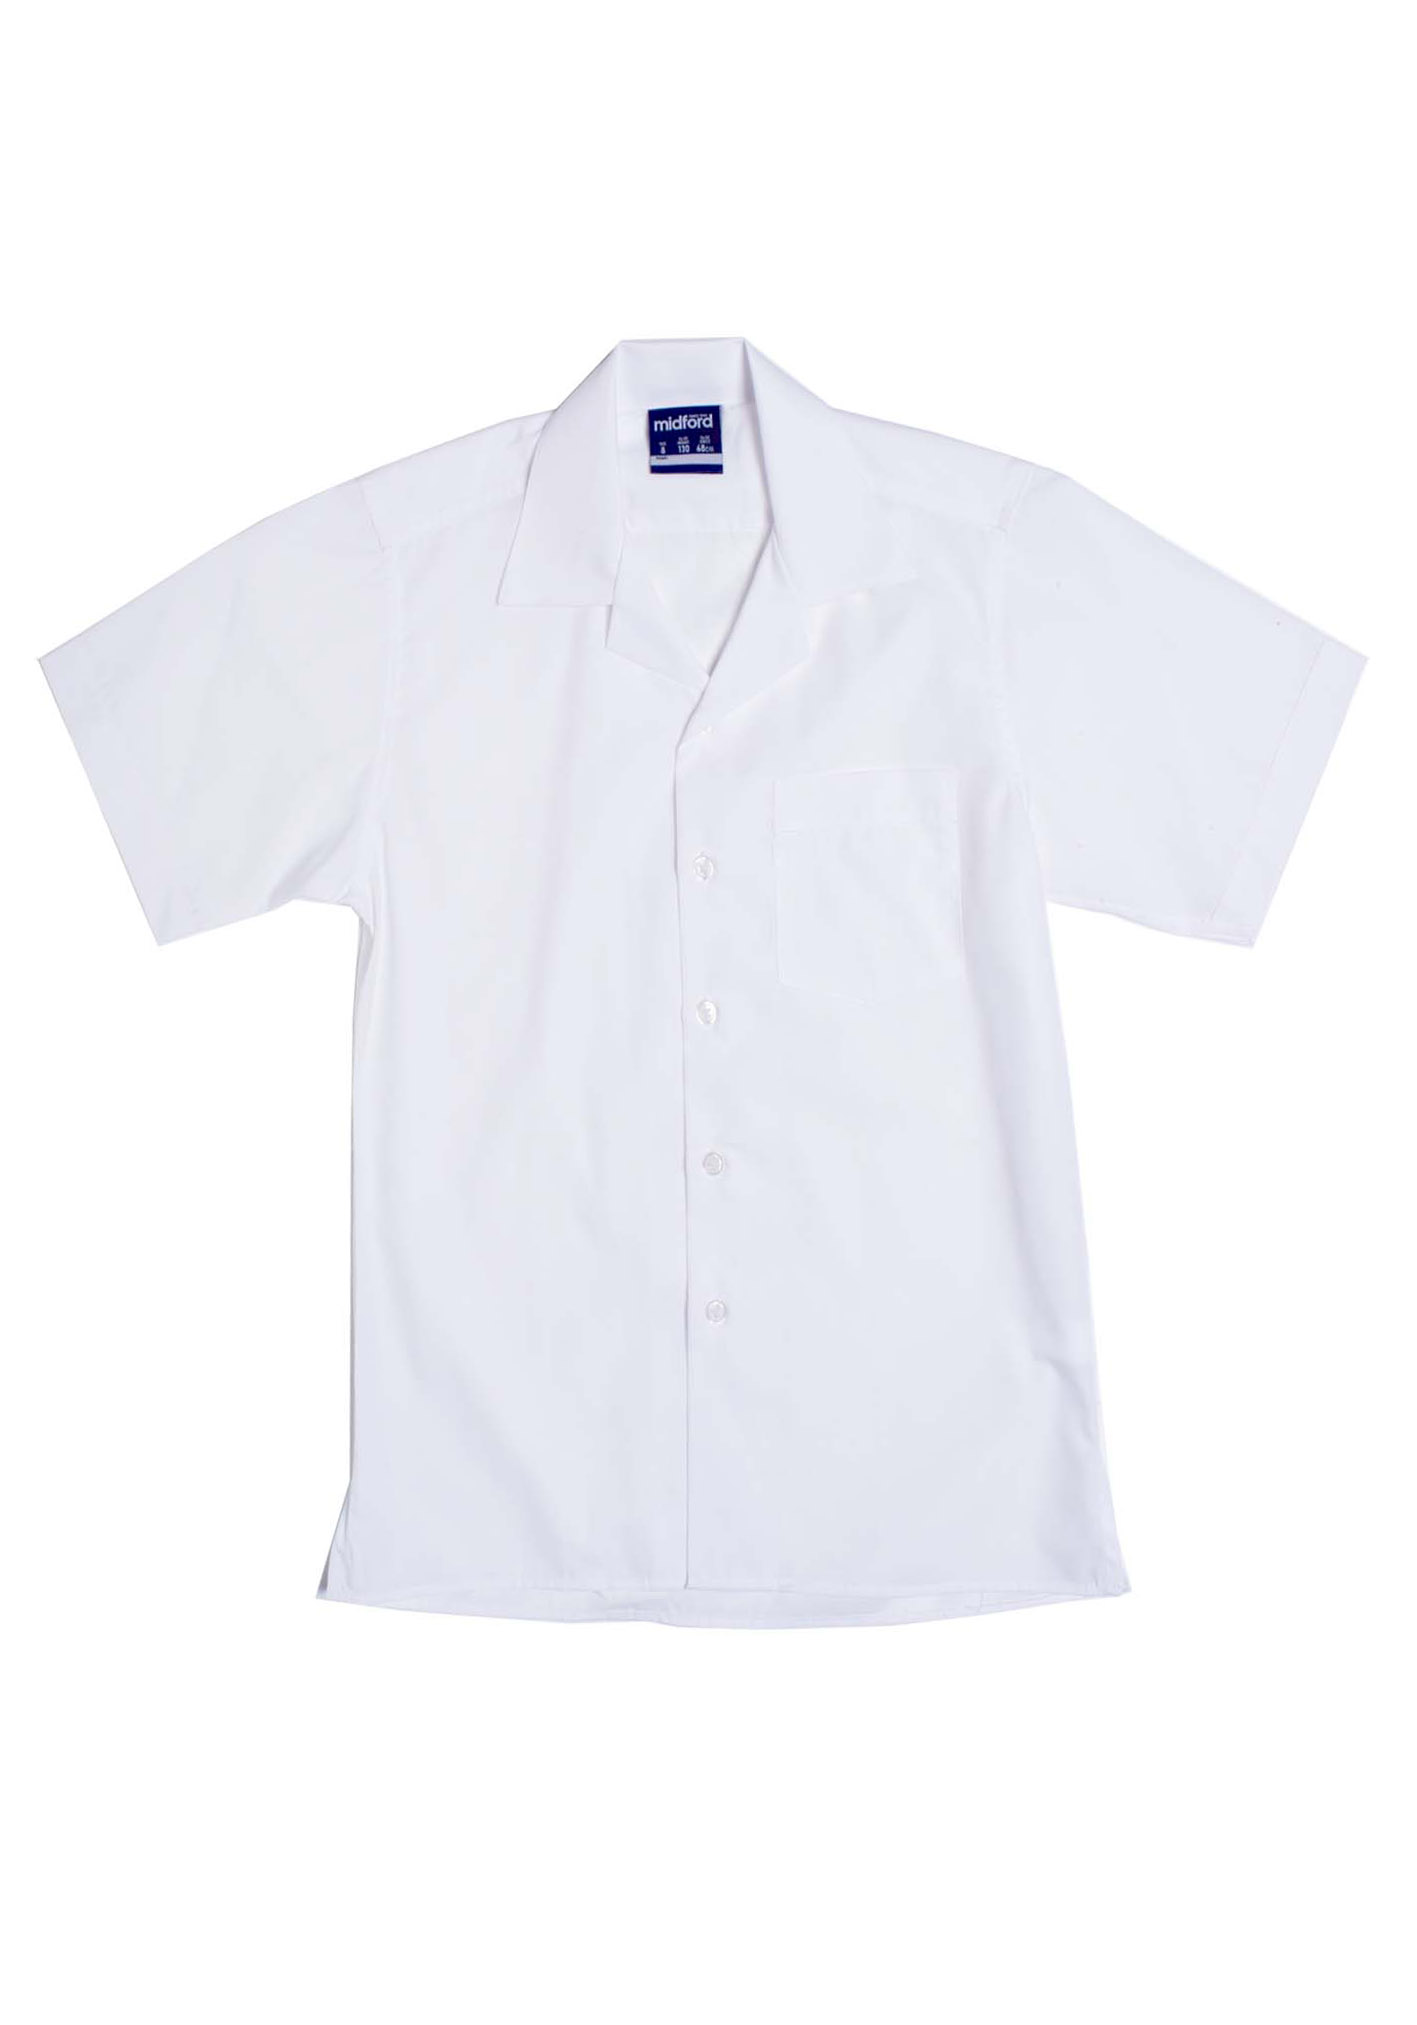 Forestville Boys White Short Sleeve Open Neck Shirt | Shop at Pickles ...